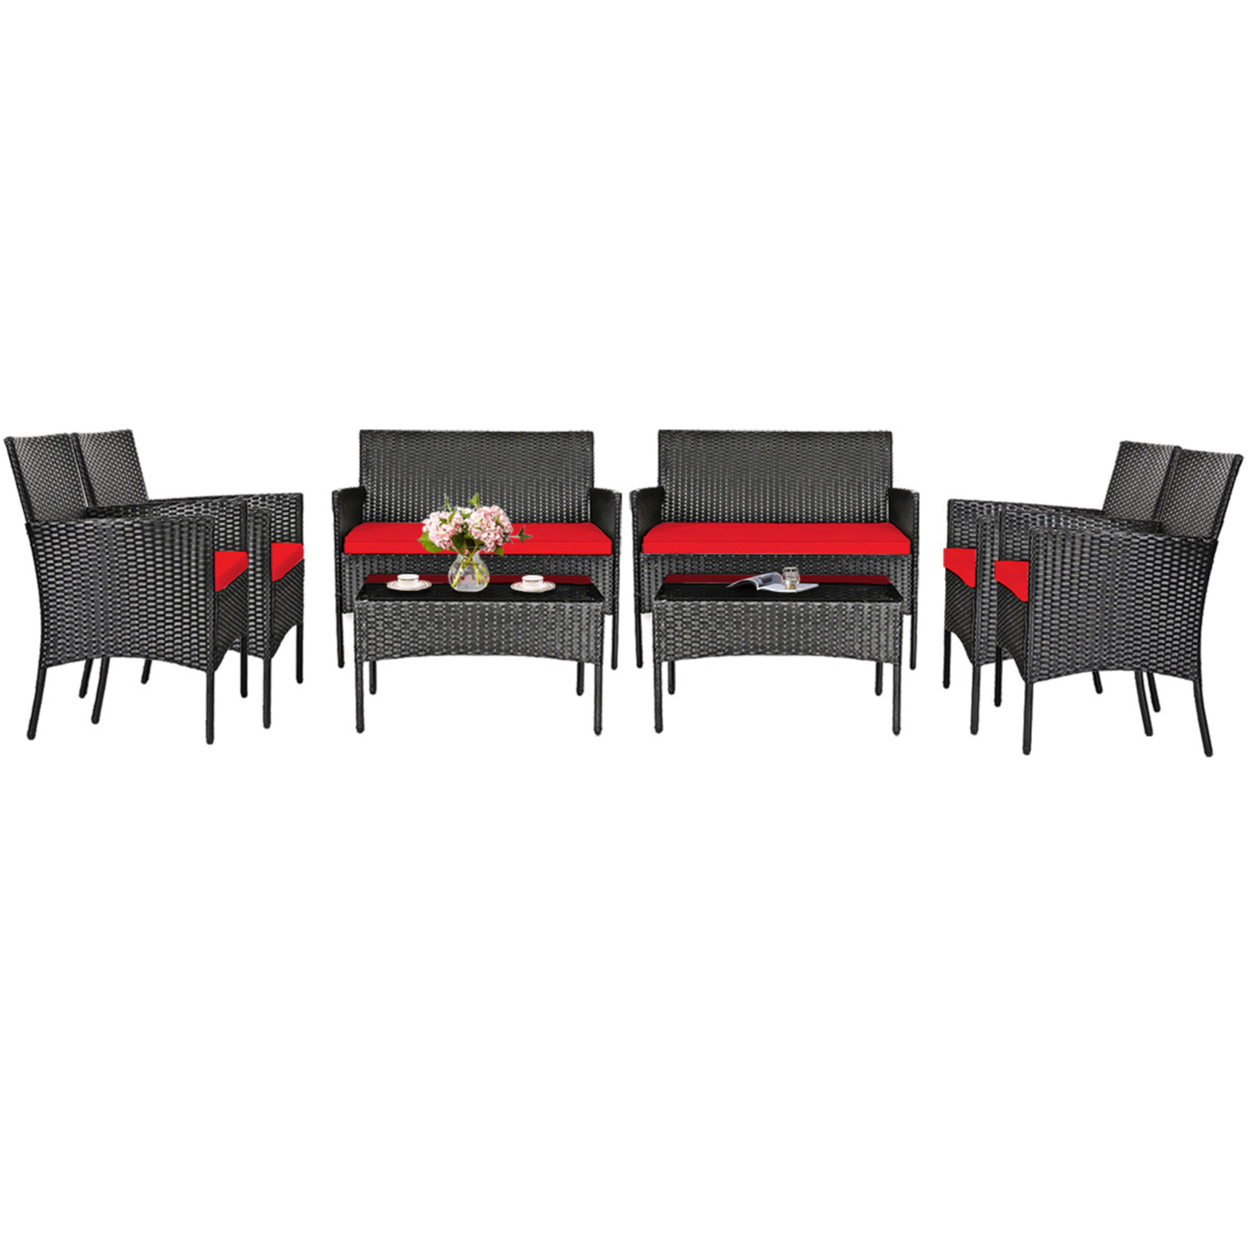 Gymax 8PCS Outdoor Furniture Set Patio Rattan Conversation Set W/ Red Cushion